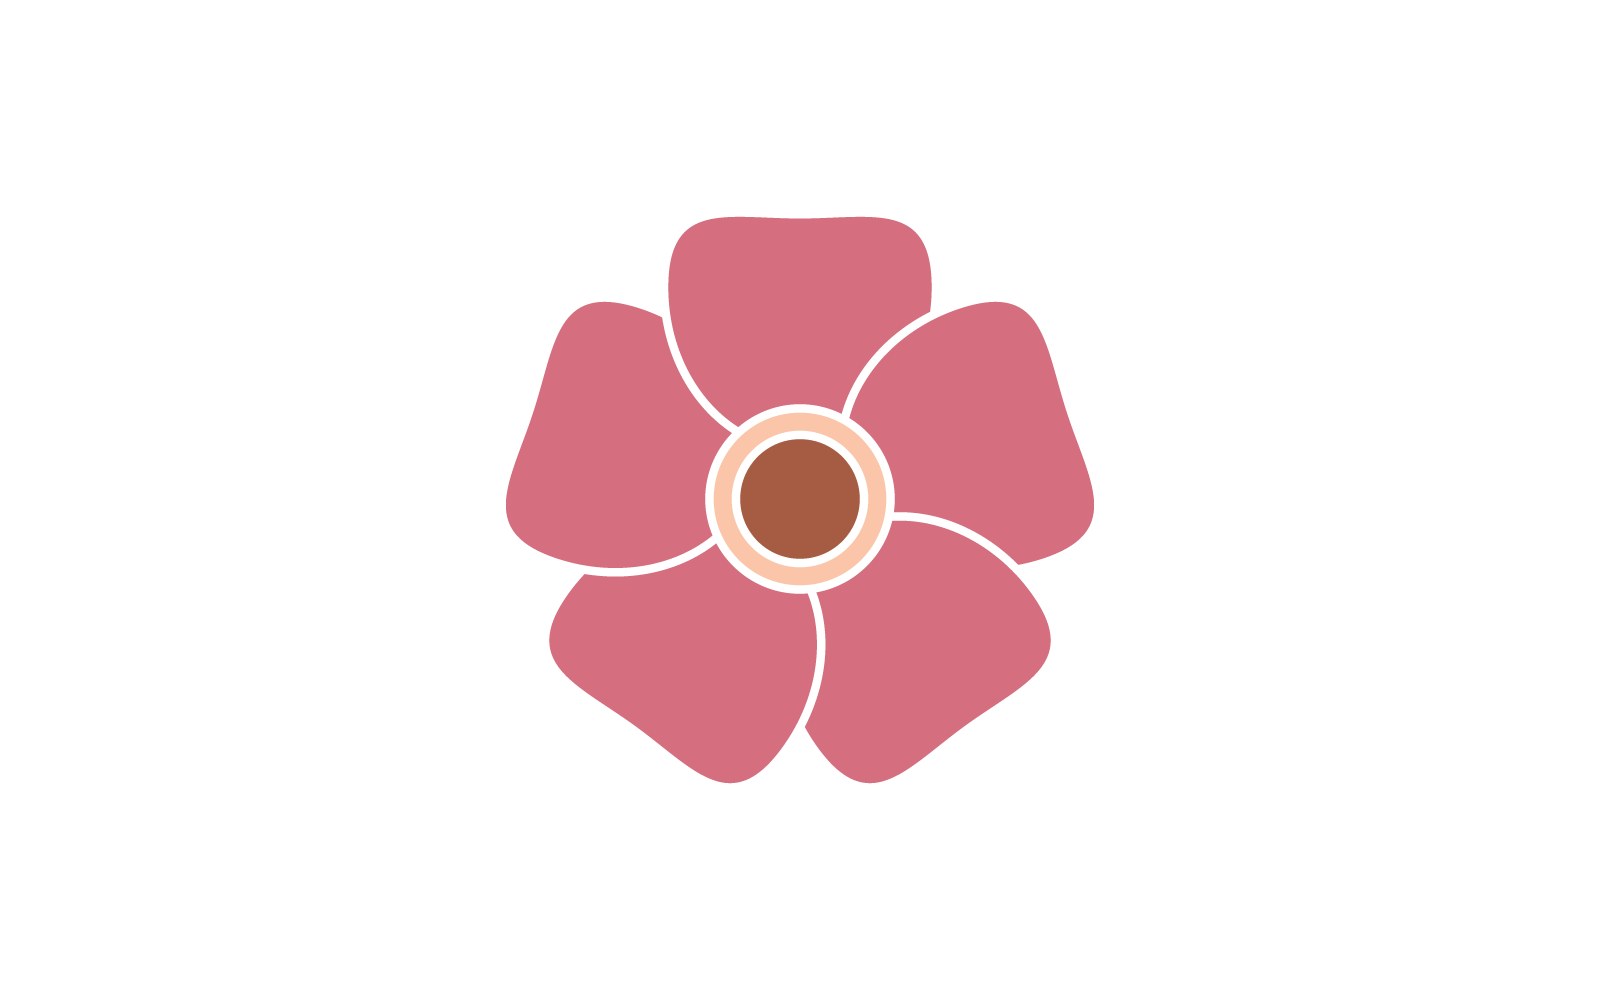 Вектор шаблона логотипа цветка плюмерии